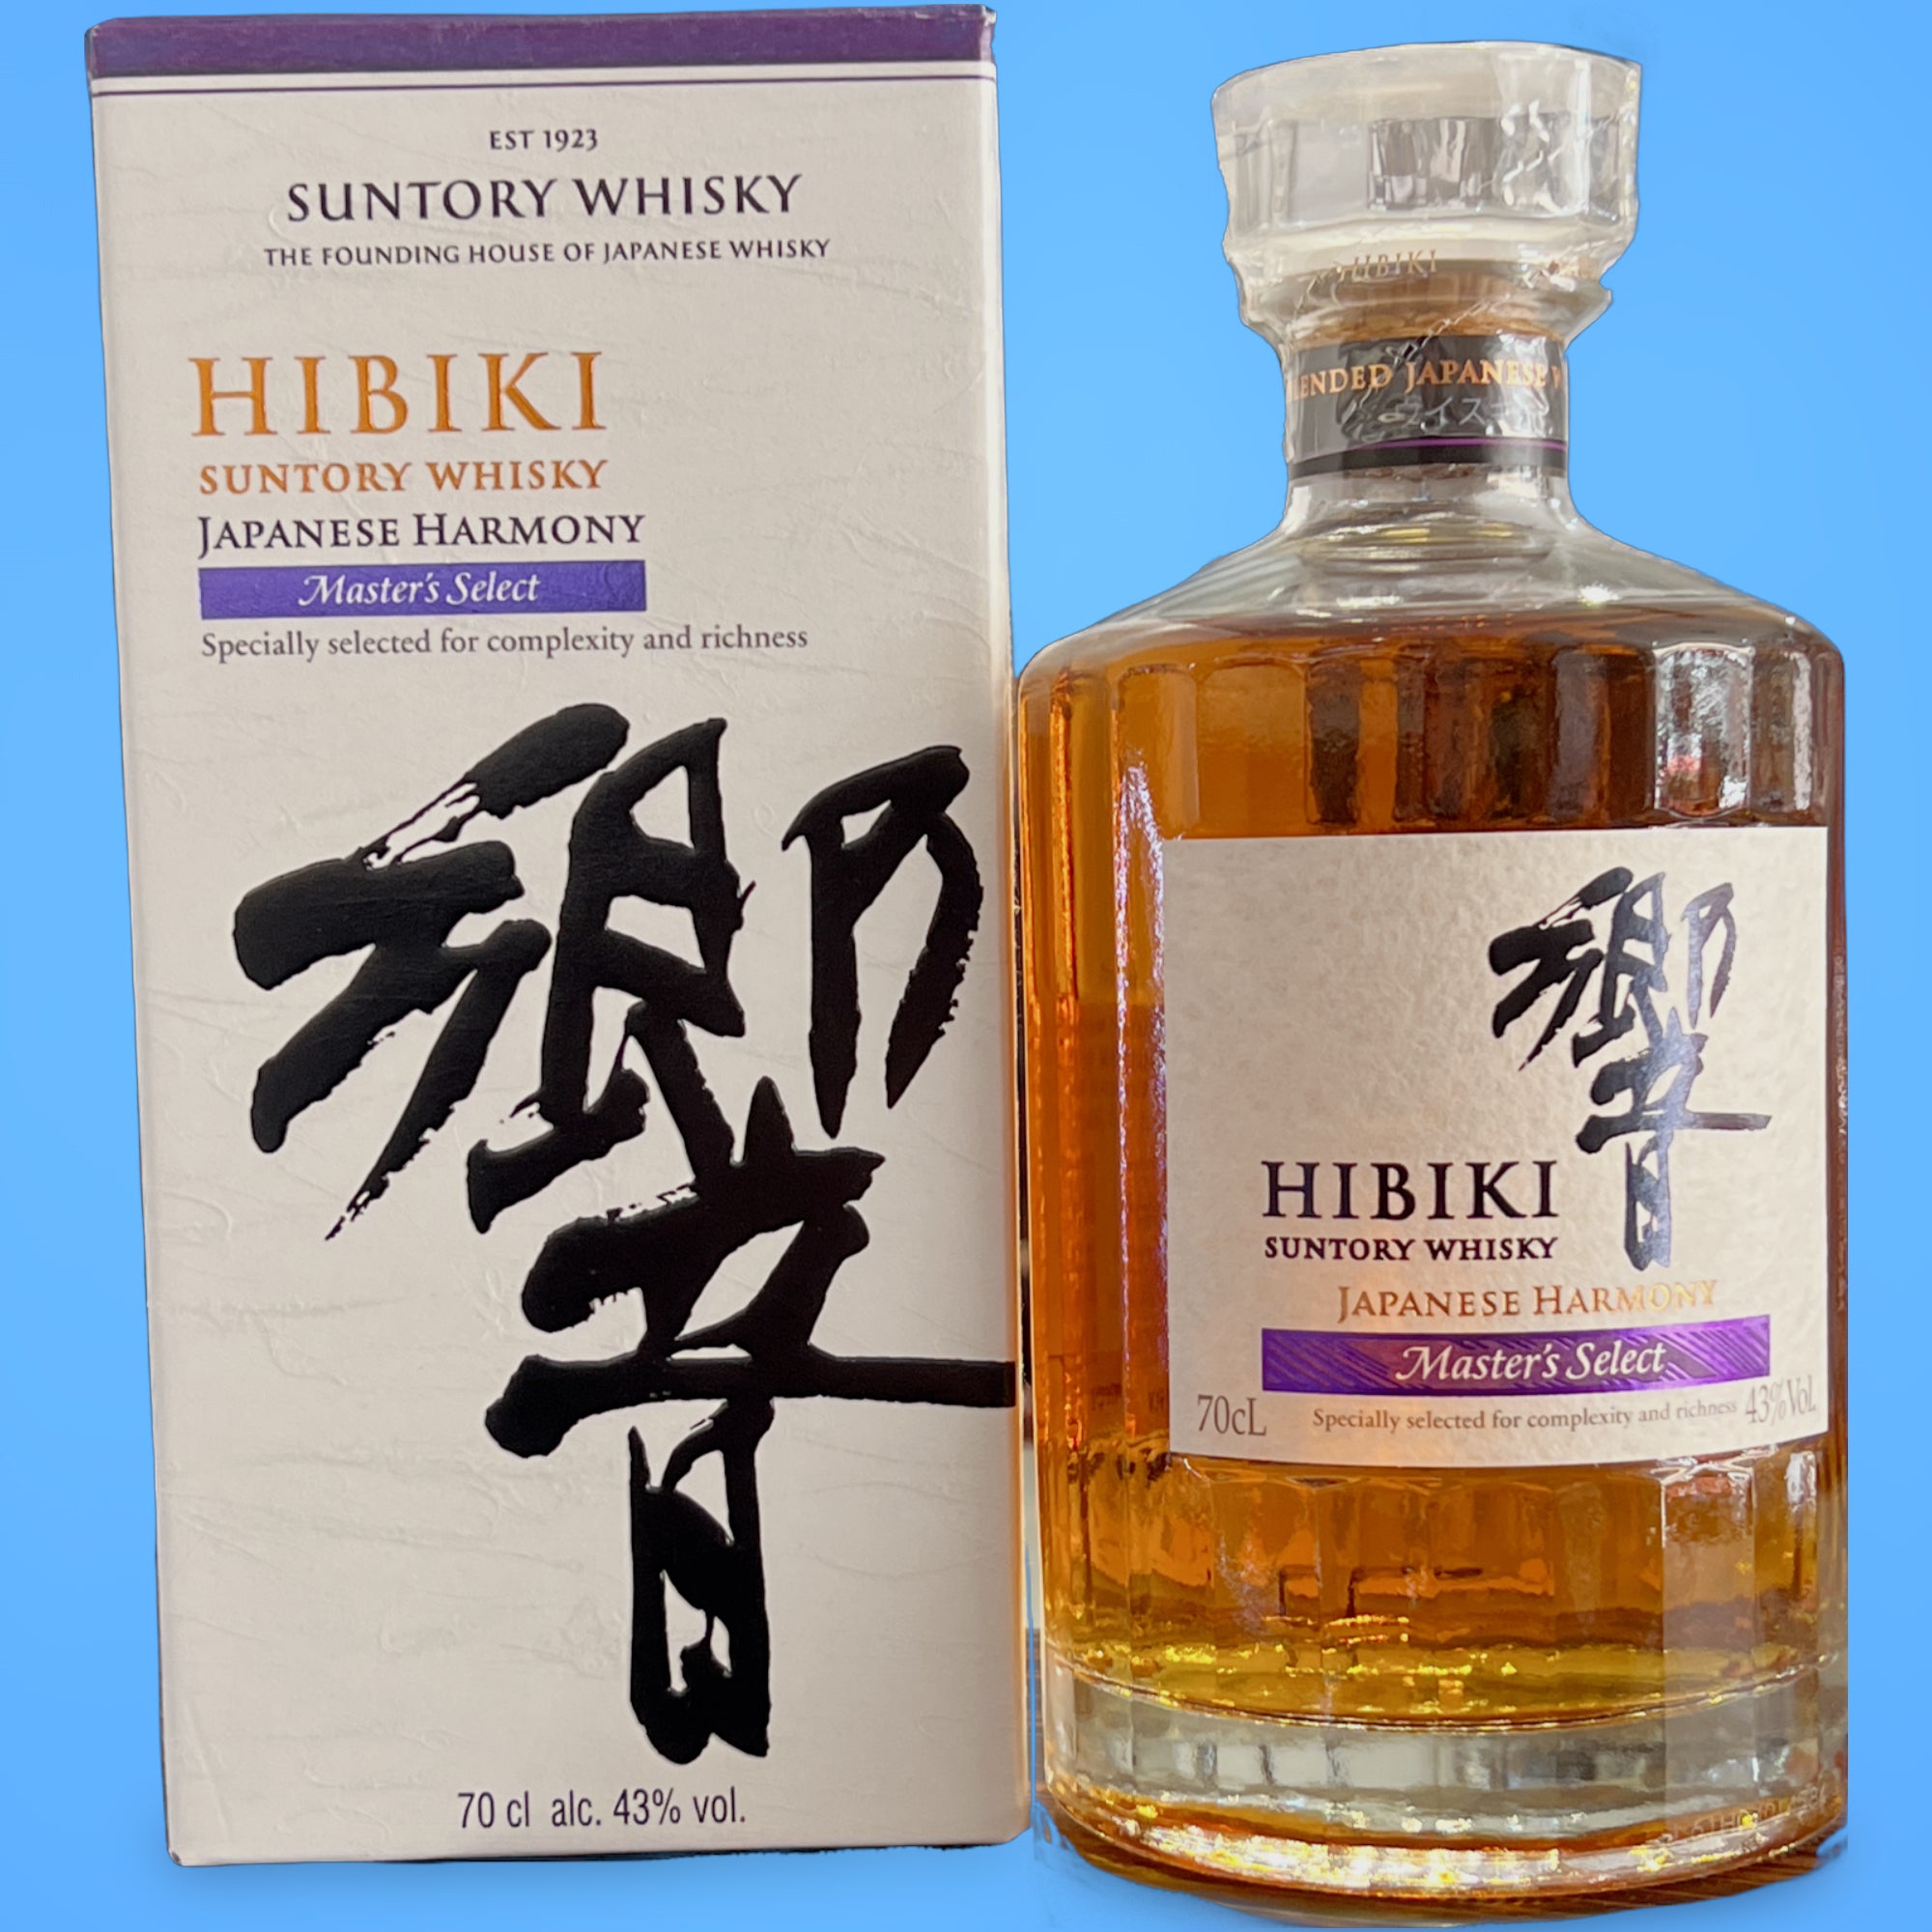 Hibiki Japanese Harmony Suntory Whisky Masters Select